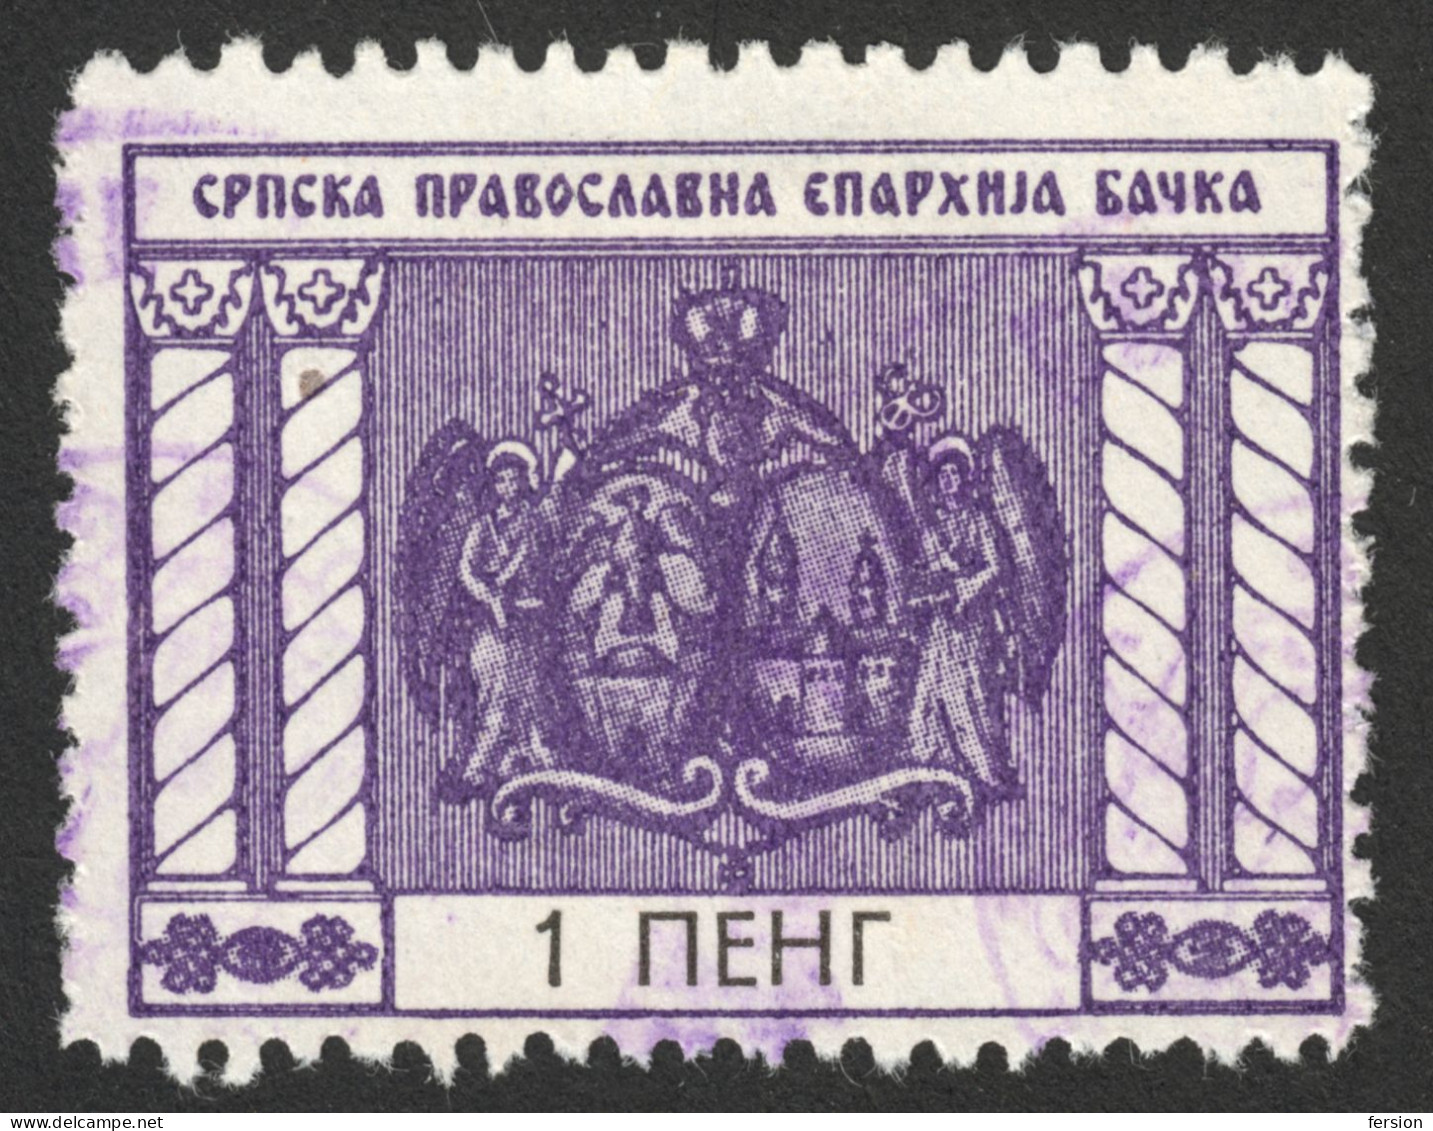 Yugoslavia / Serbia / Hungary Occupation WWII WAR Backa Orthodox Church Administrative Stamp - Revenue Tax - 1 Peng - Service